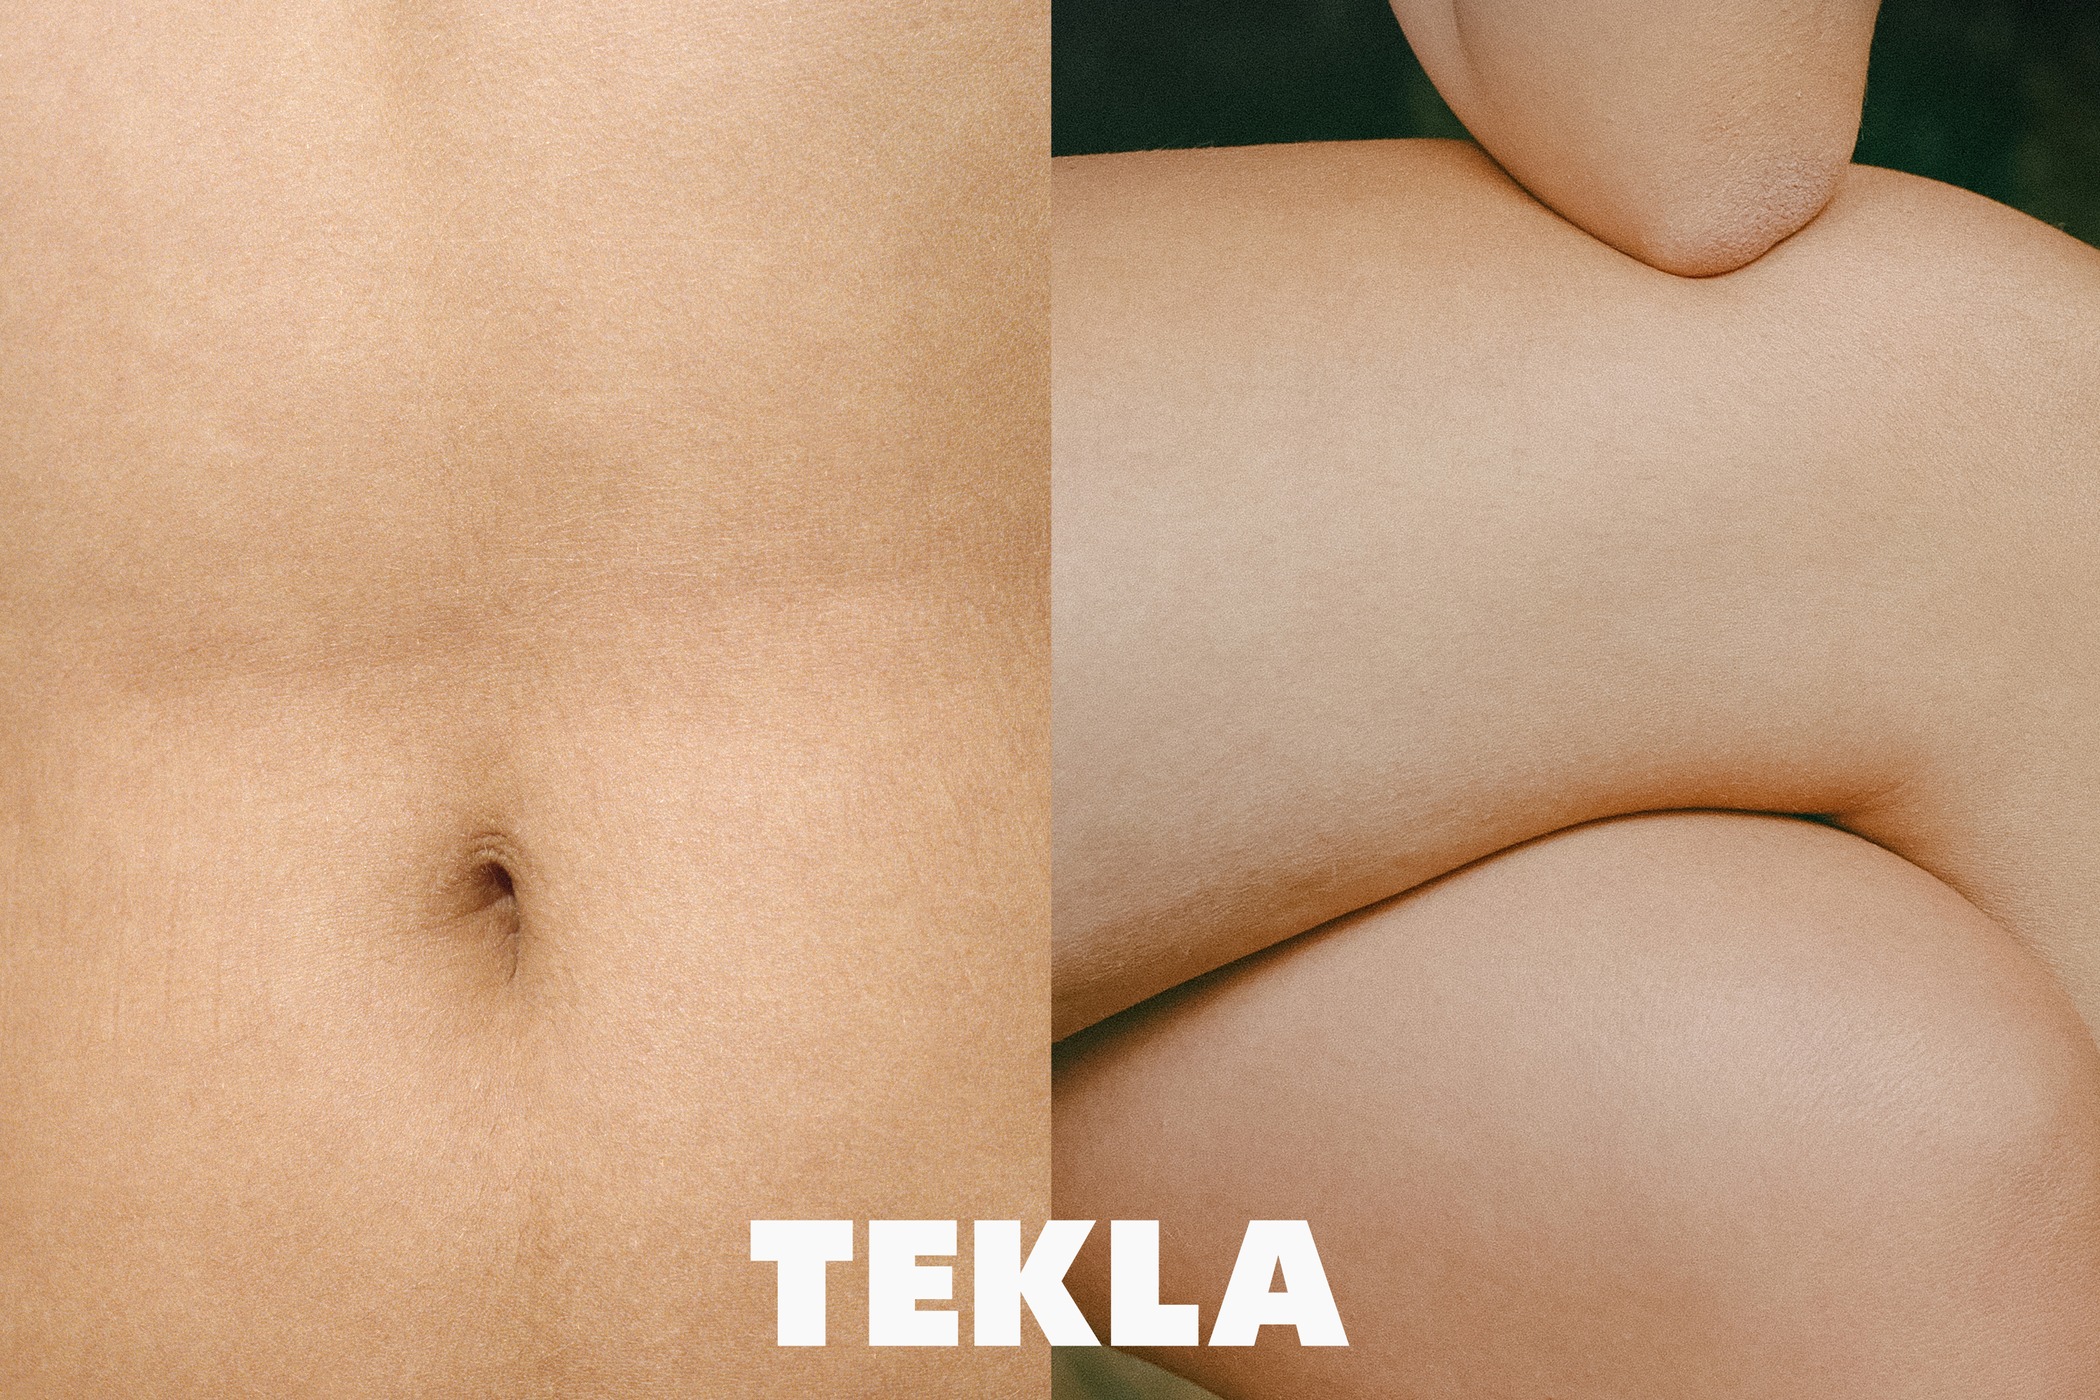 Tekla sleepwear campaign art direction shot by Polly Brown